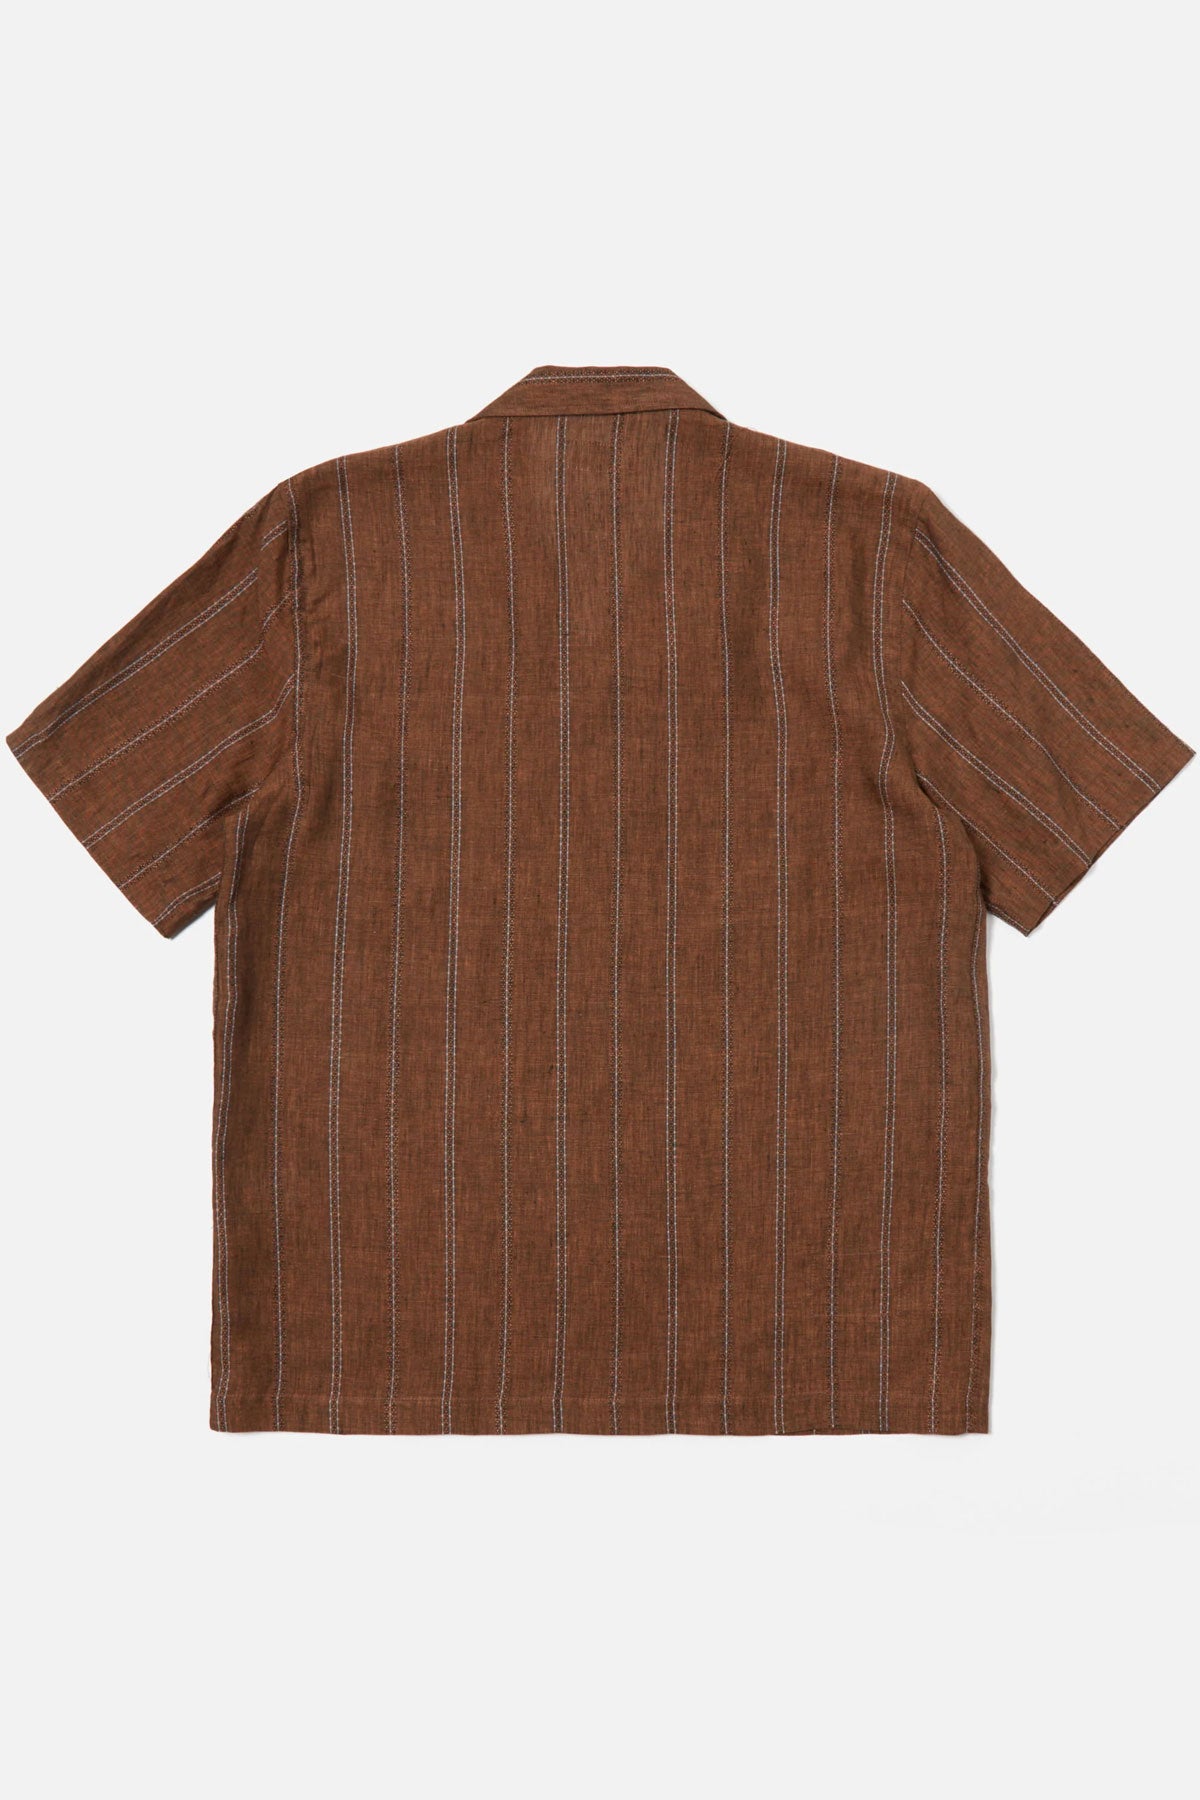 Universal Works - Road Shirt In Brown Stripe Linen